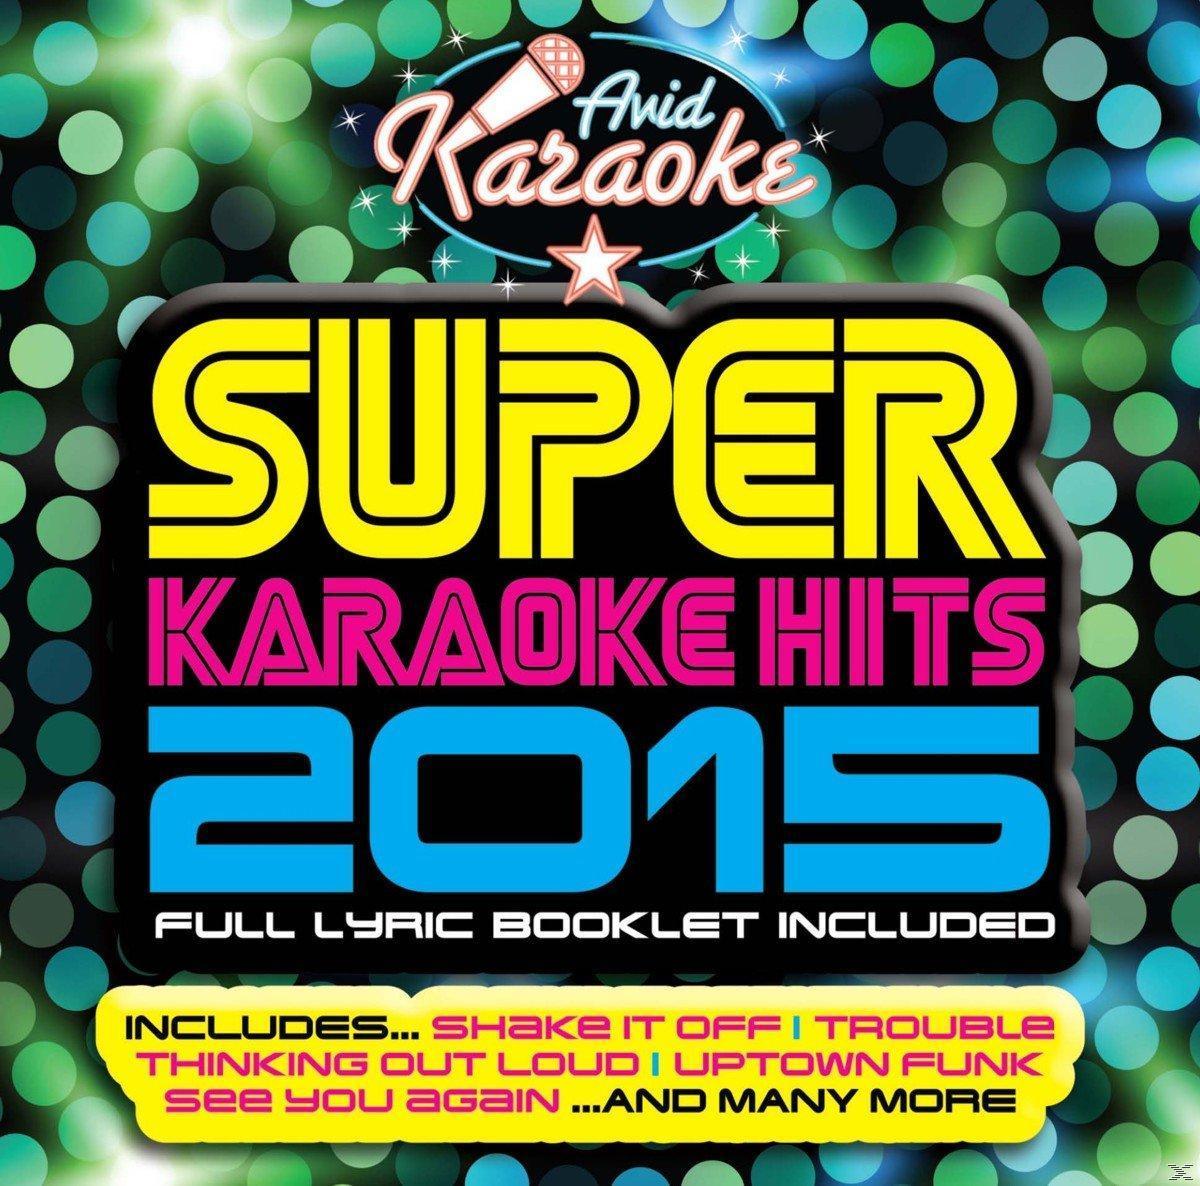 Karaoke - (DVD) VARIOUS - 2015 Hits Super